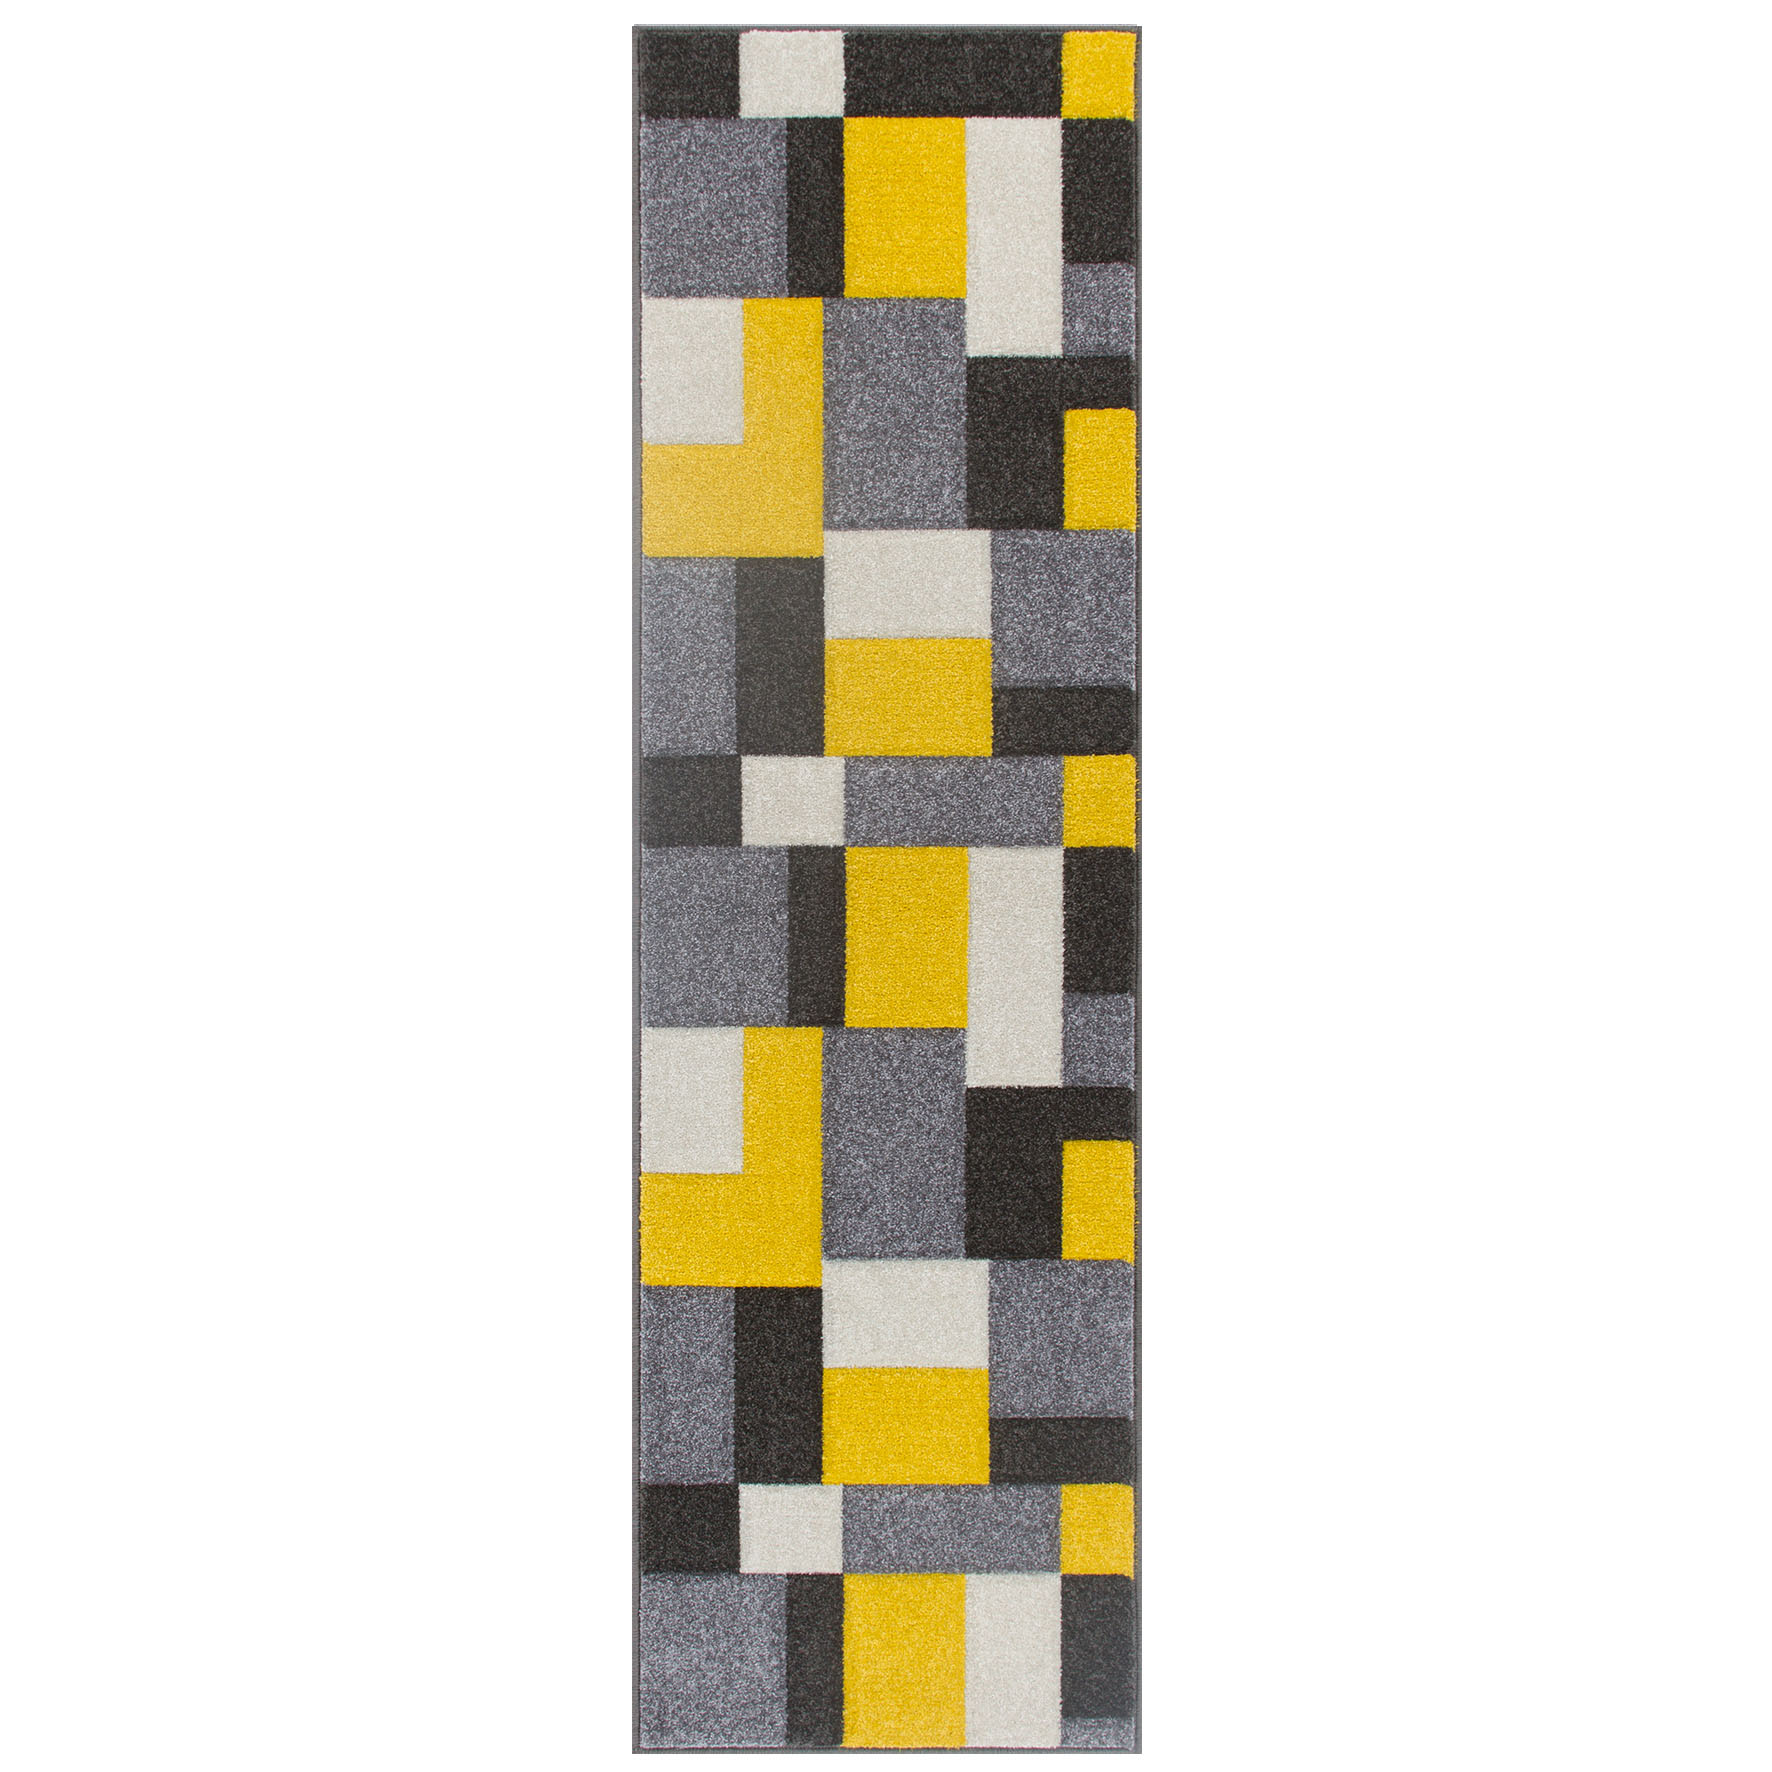 Portland Geometric Rug - 8425I Black Yellow Grey